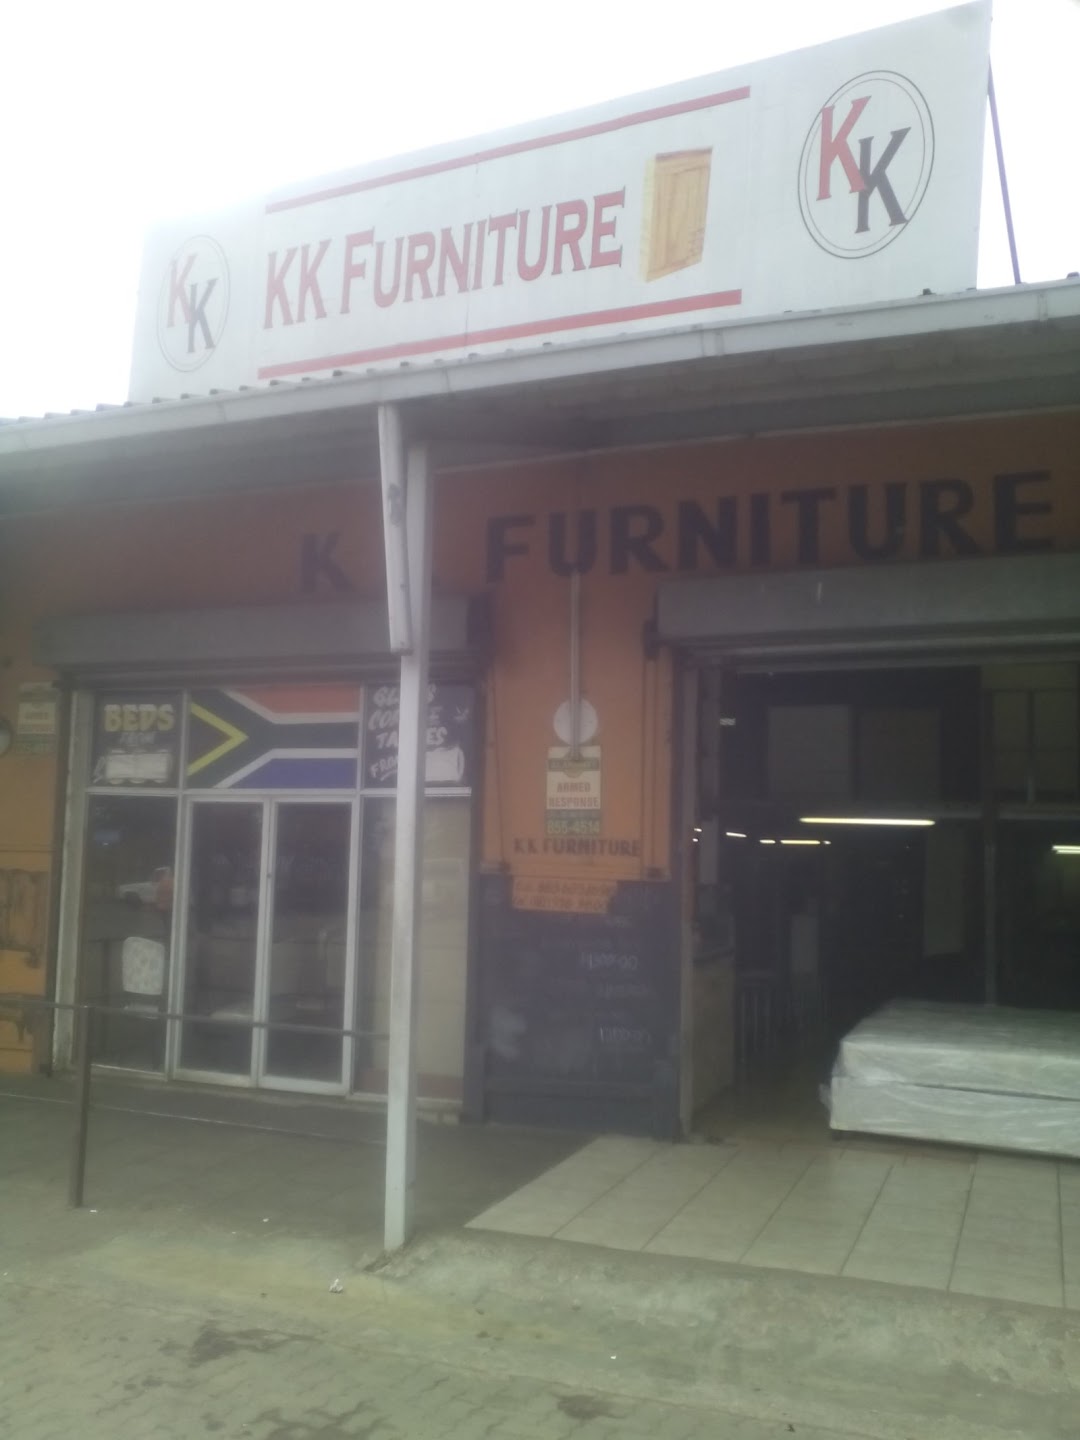 K K Furniture